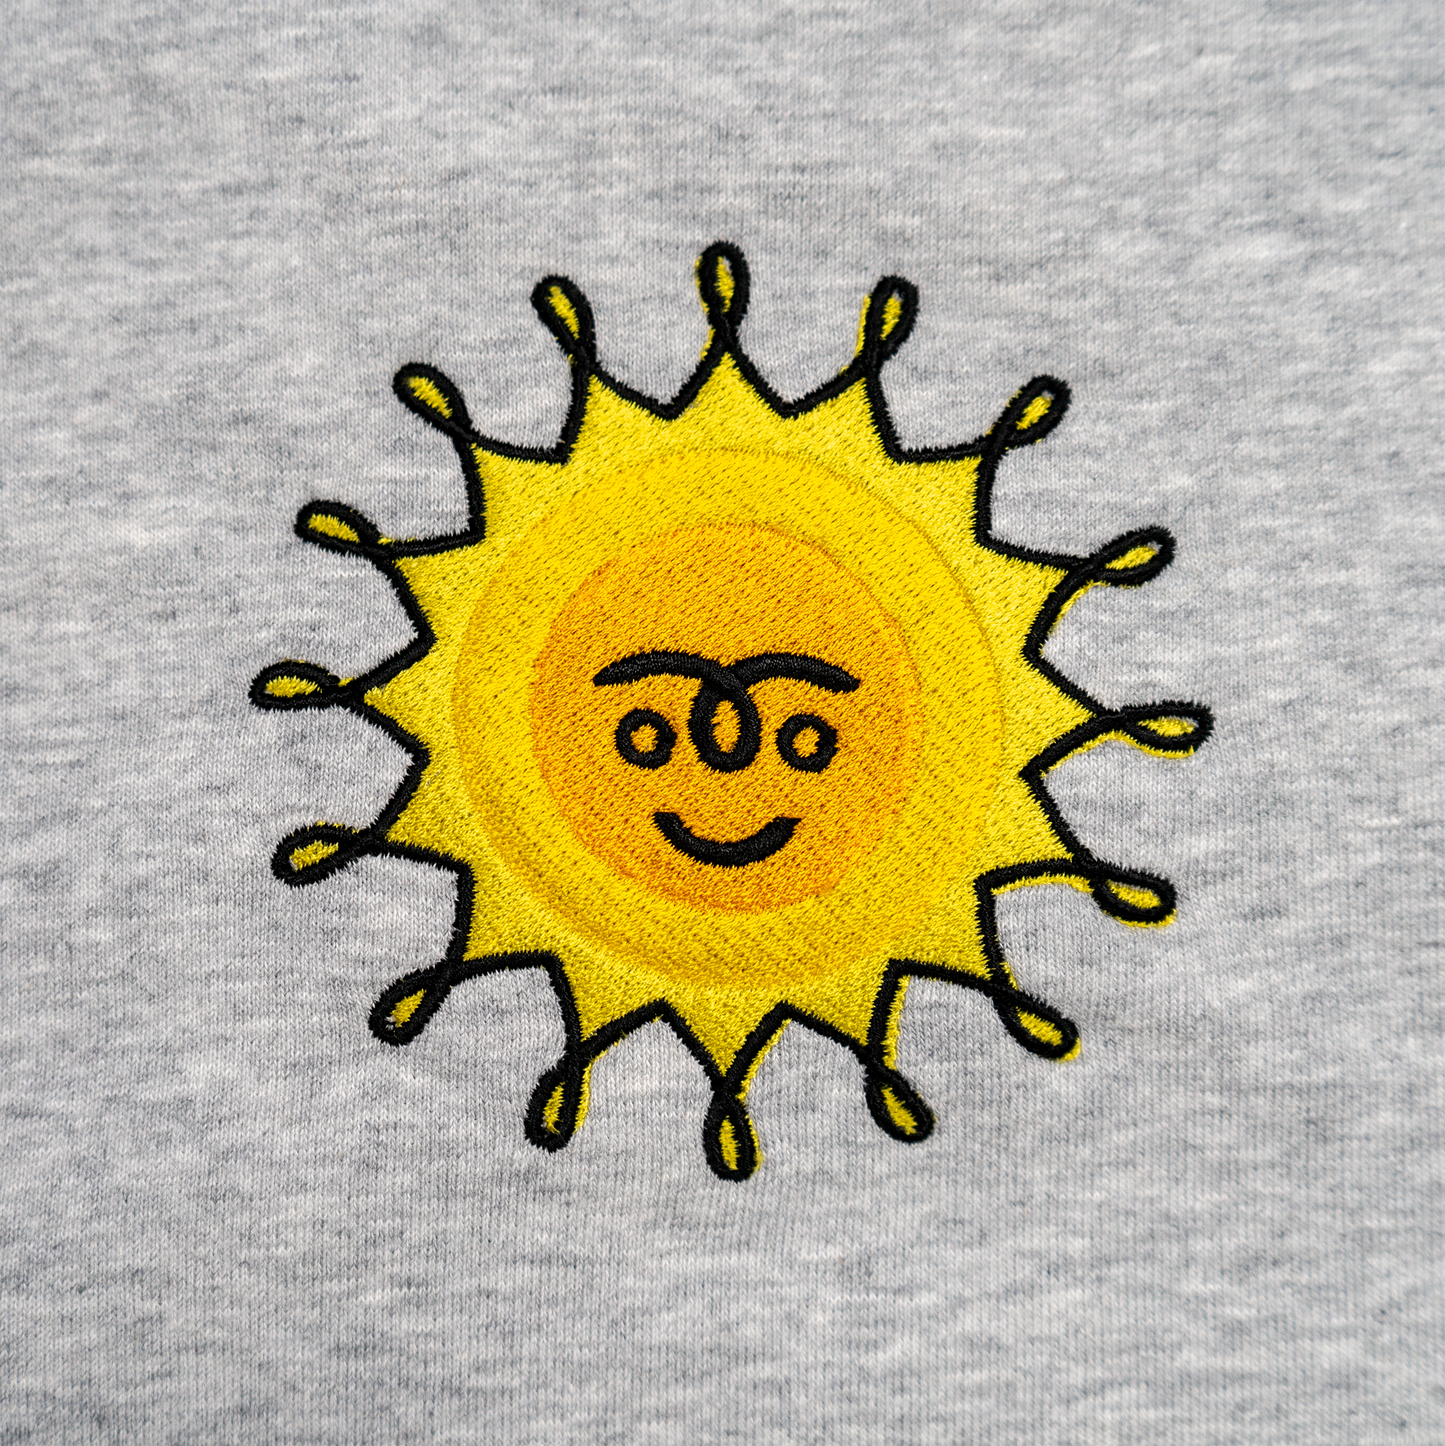 Morning Sun Embroidered Sweatshirt - Marl Grey